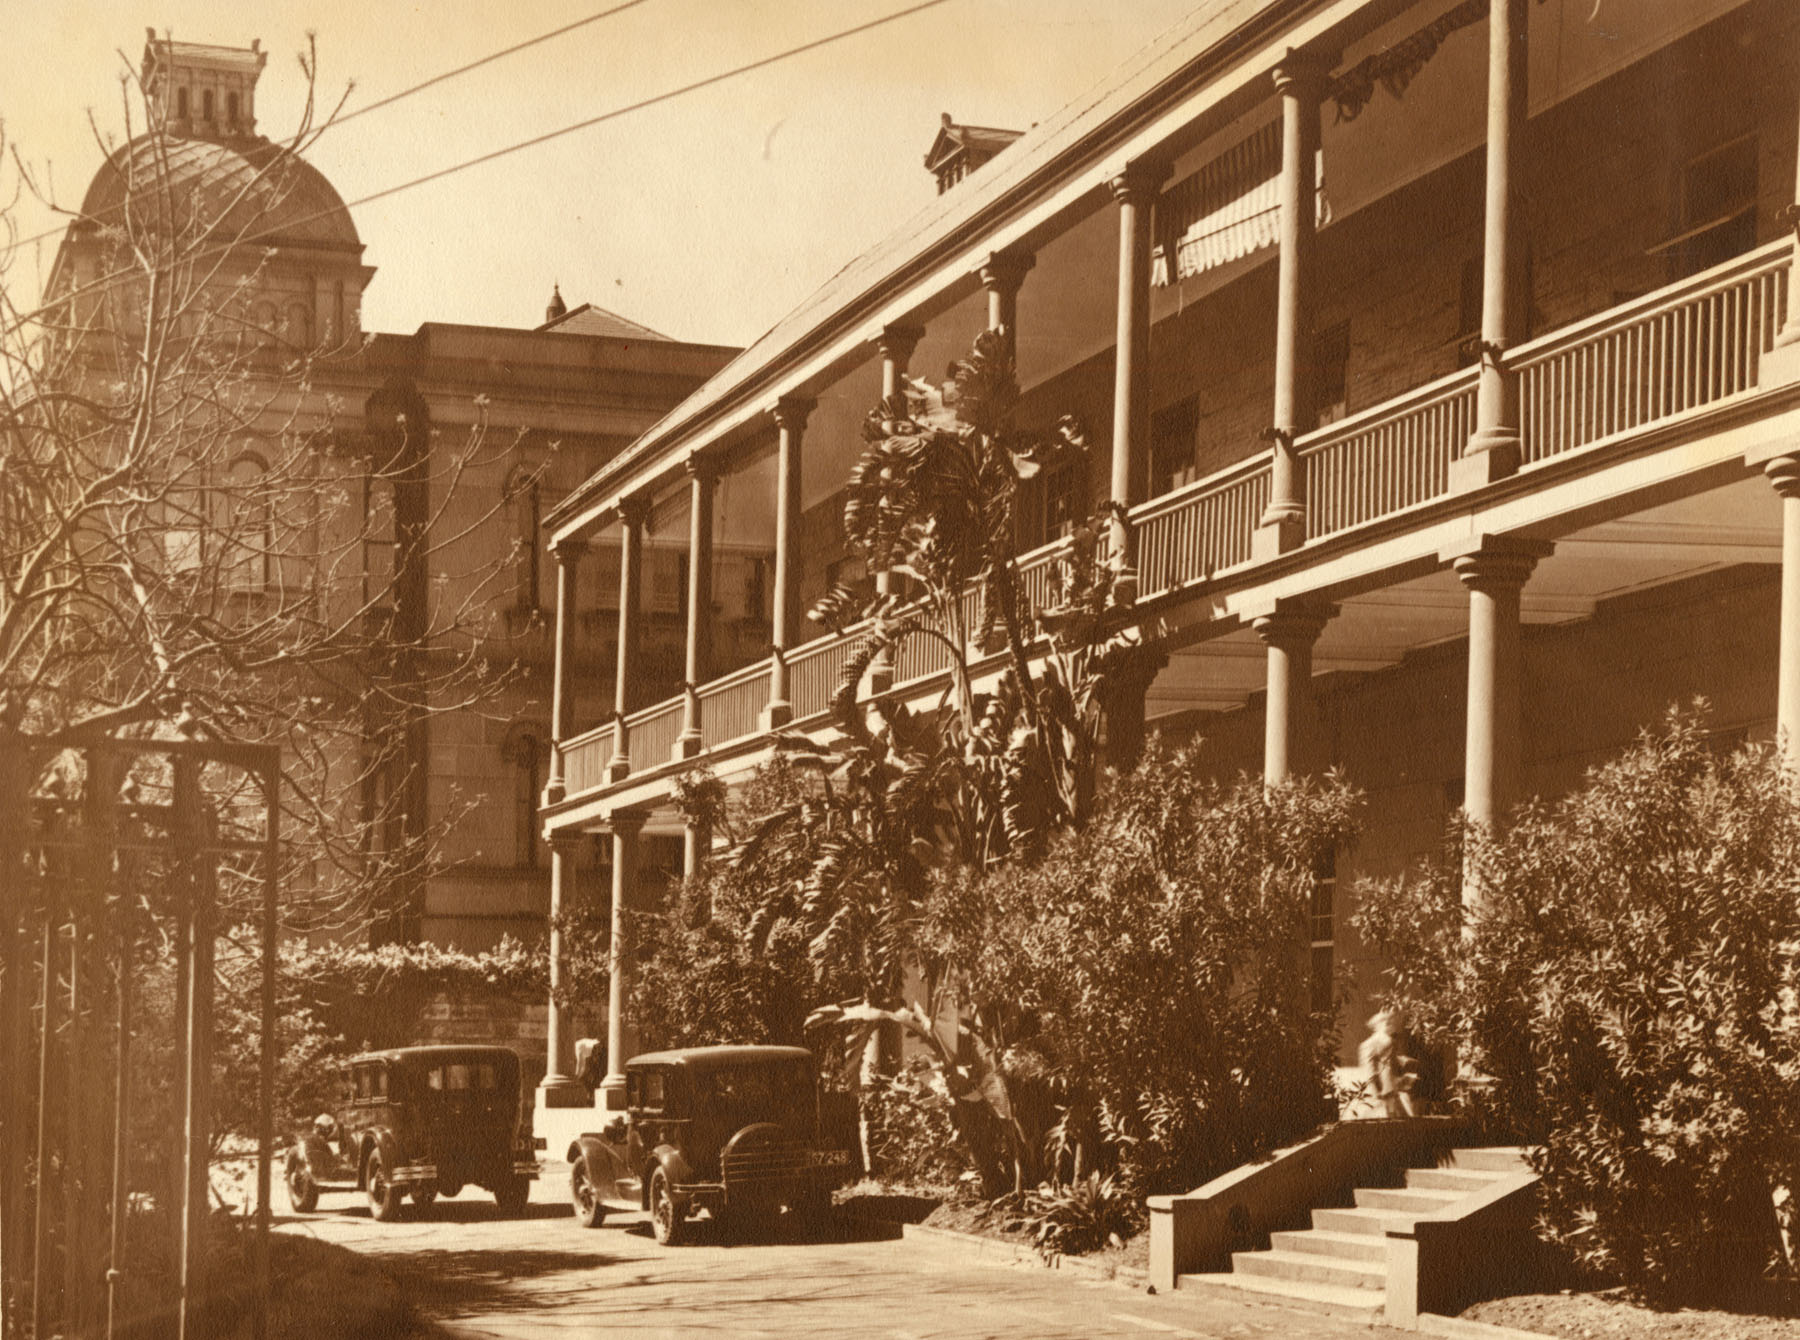 Entrance "The Old Mint" [Macquarie Street Sydney], ca.1935 / Thomas J. Lawlor